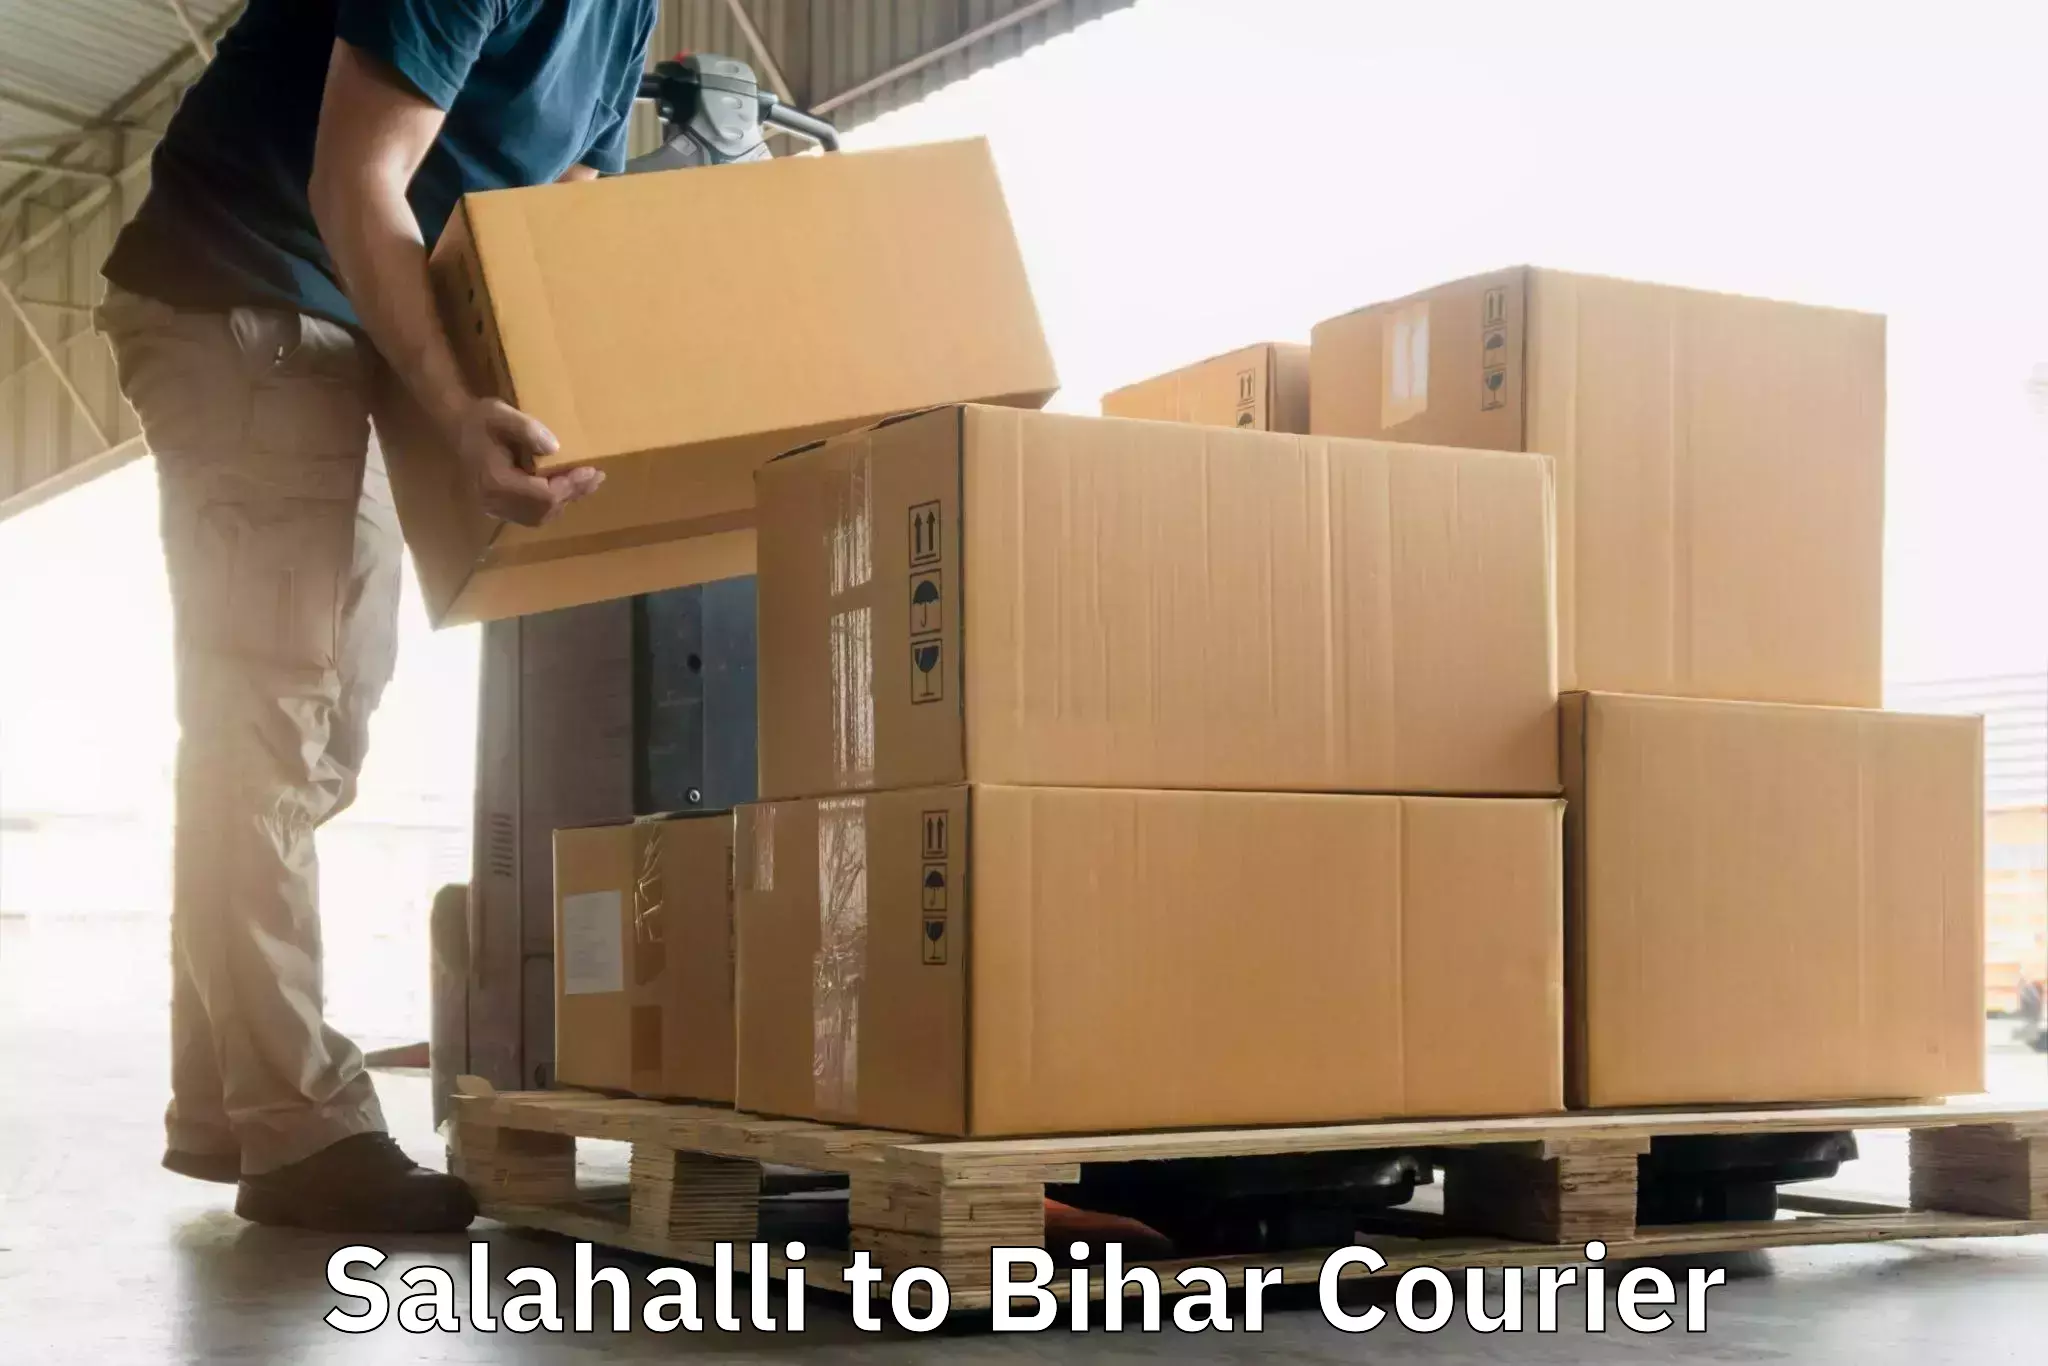 State-of-the-art courier technology Salahalli to Bihar